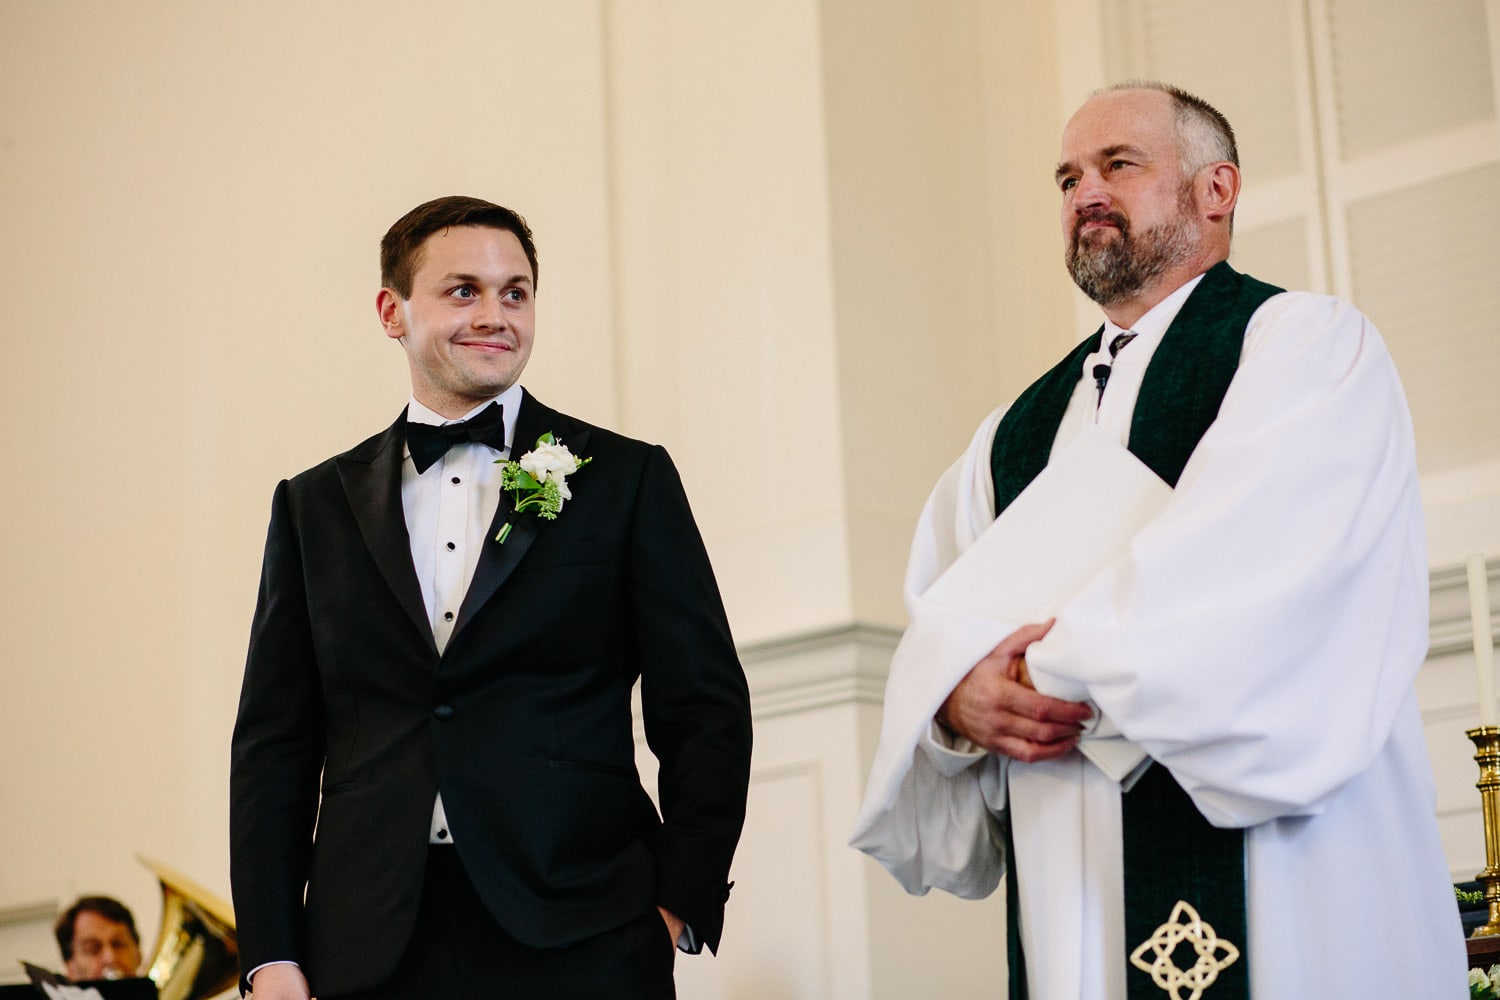 Wedding at the Hingham Congregational Church | Kelly Benvenuto Photography | Boston wedding photographer